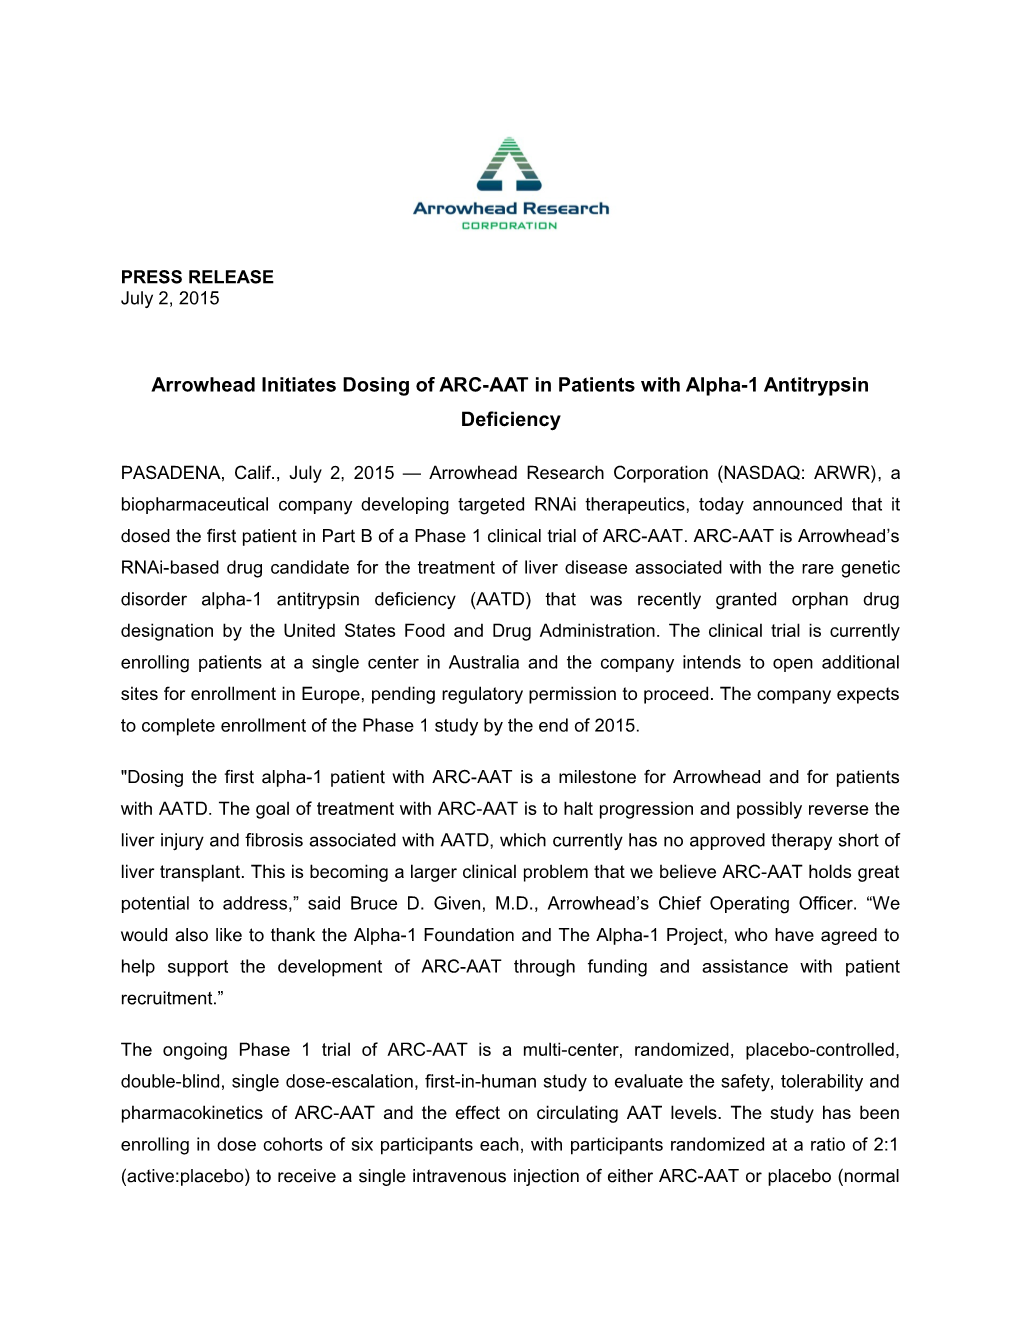 Arrowhead Initiates Dosing of ARC-AAT in Patients with Alpha-1 Antitrypsin Deficiency